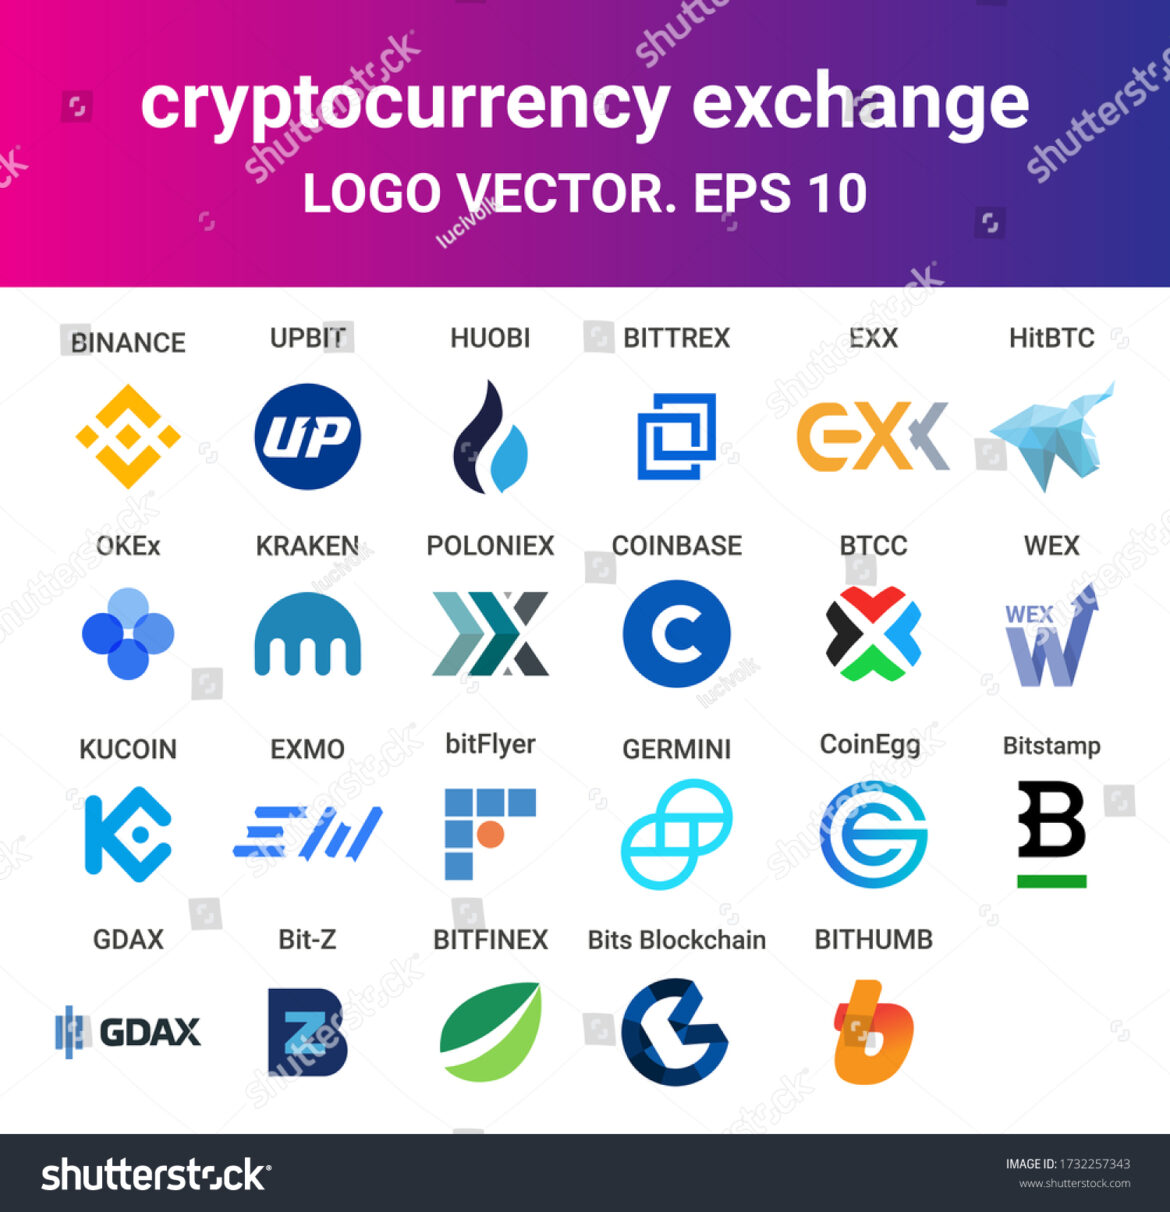 crypto exchanges